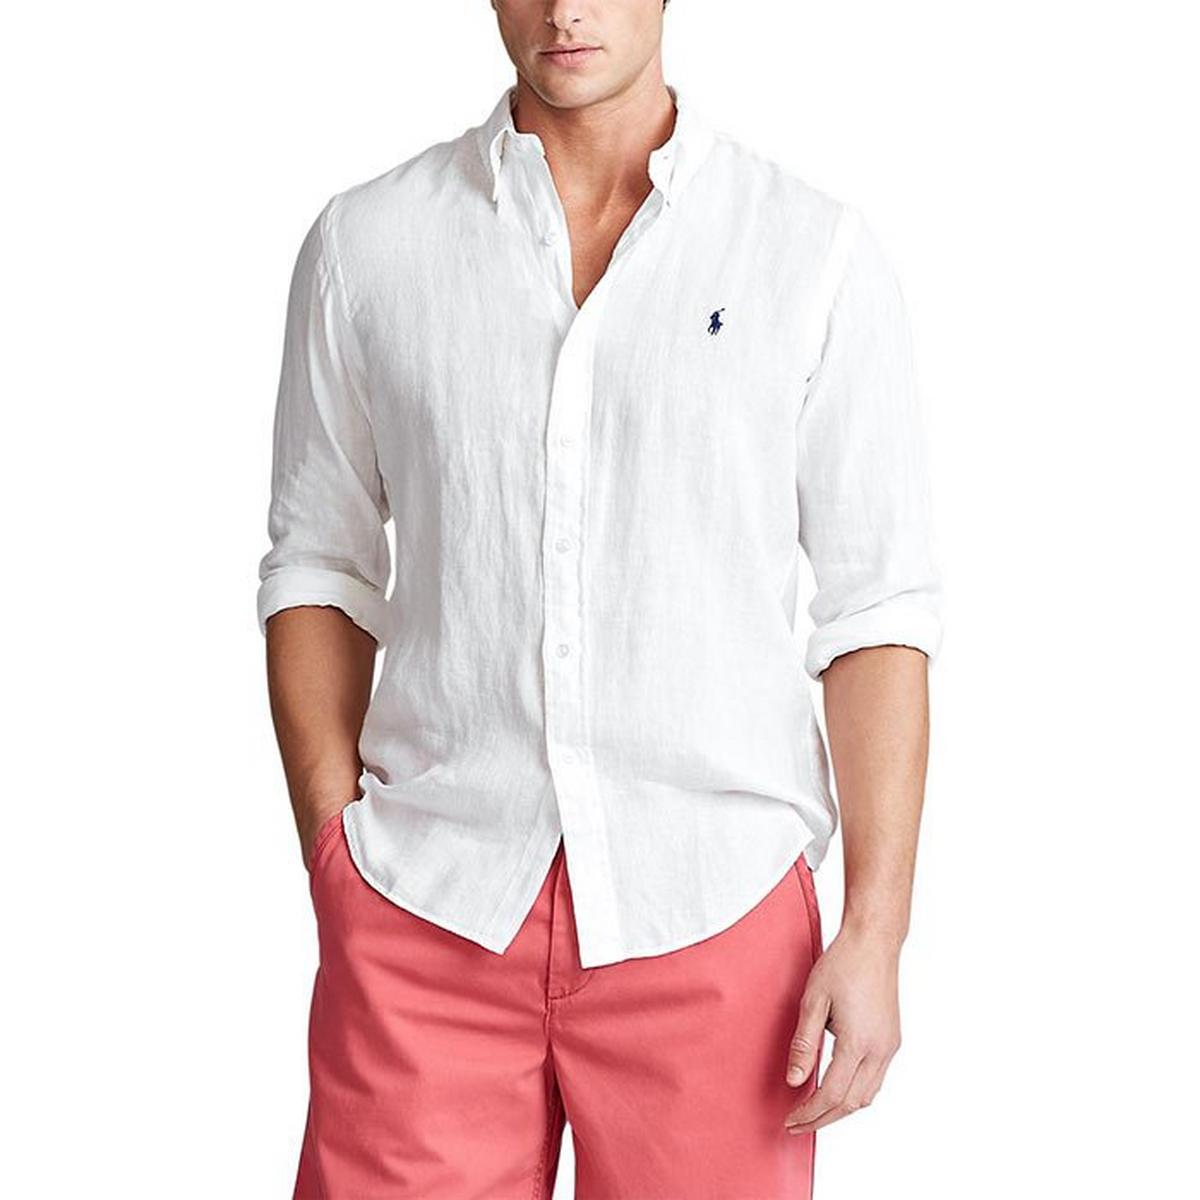 Men's Classic Fit Linen Shirt